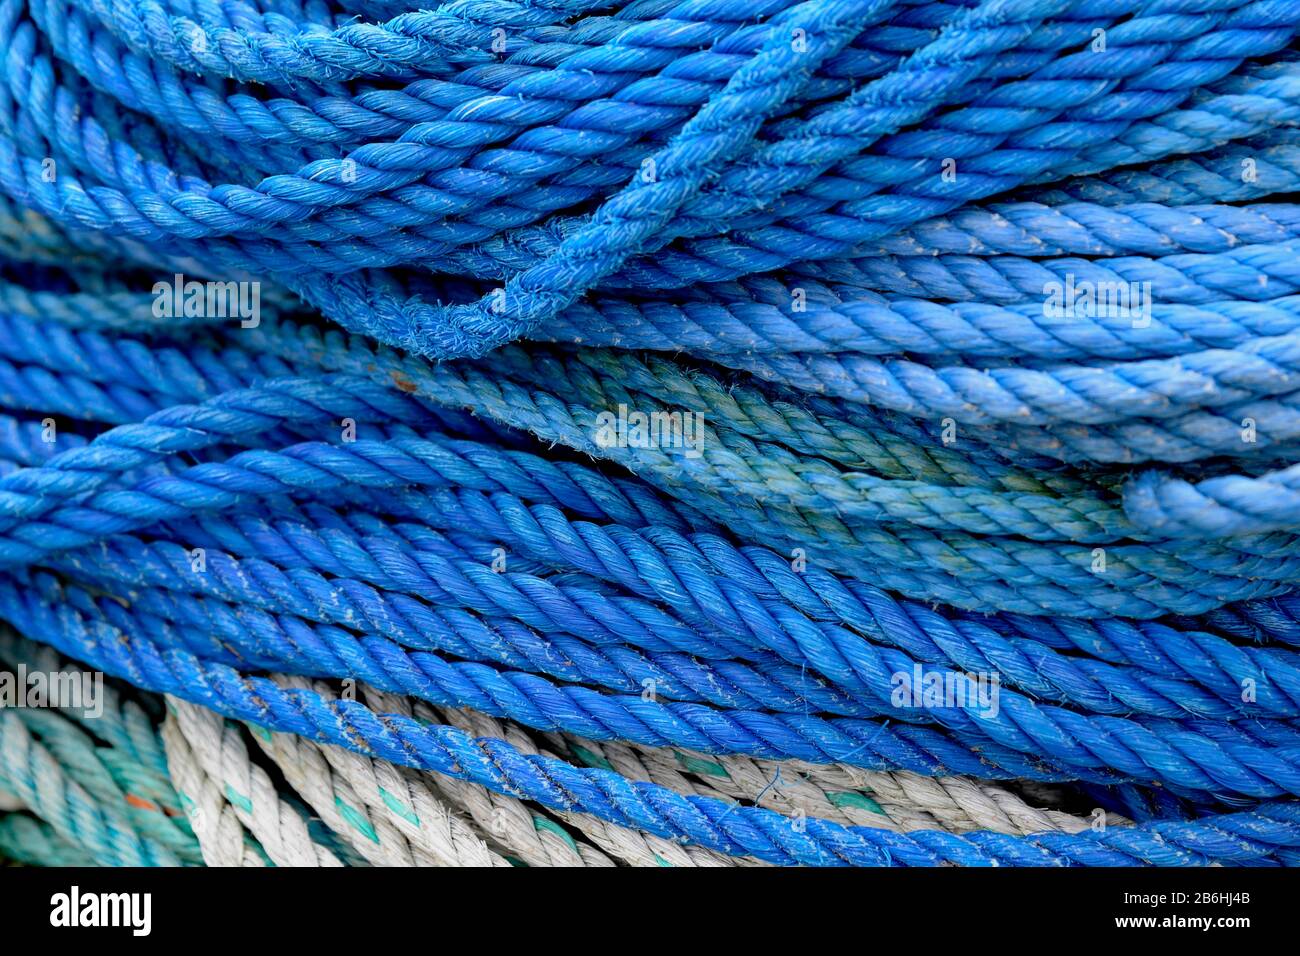 Ropes, blue synthetic fibre ropes, close up, Heligoland, North Sea